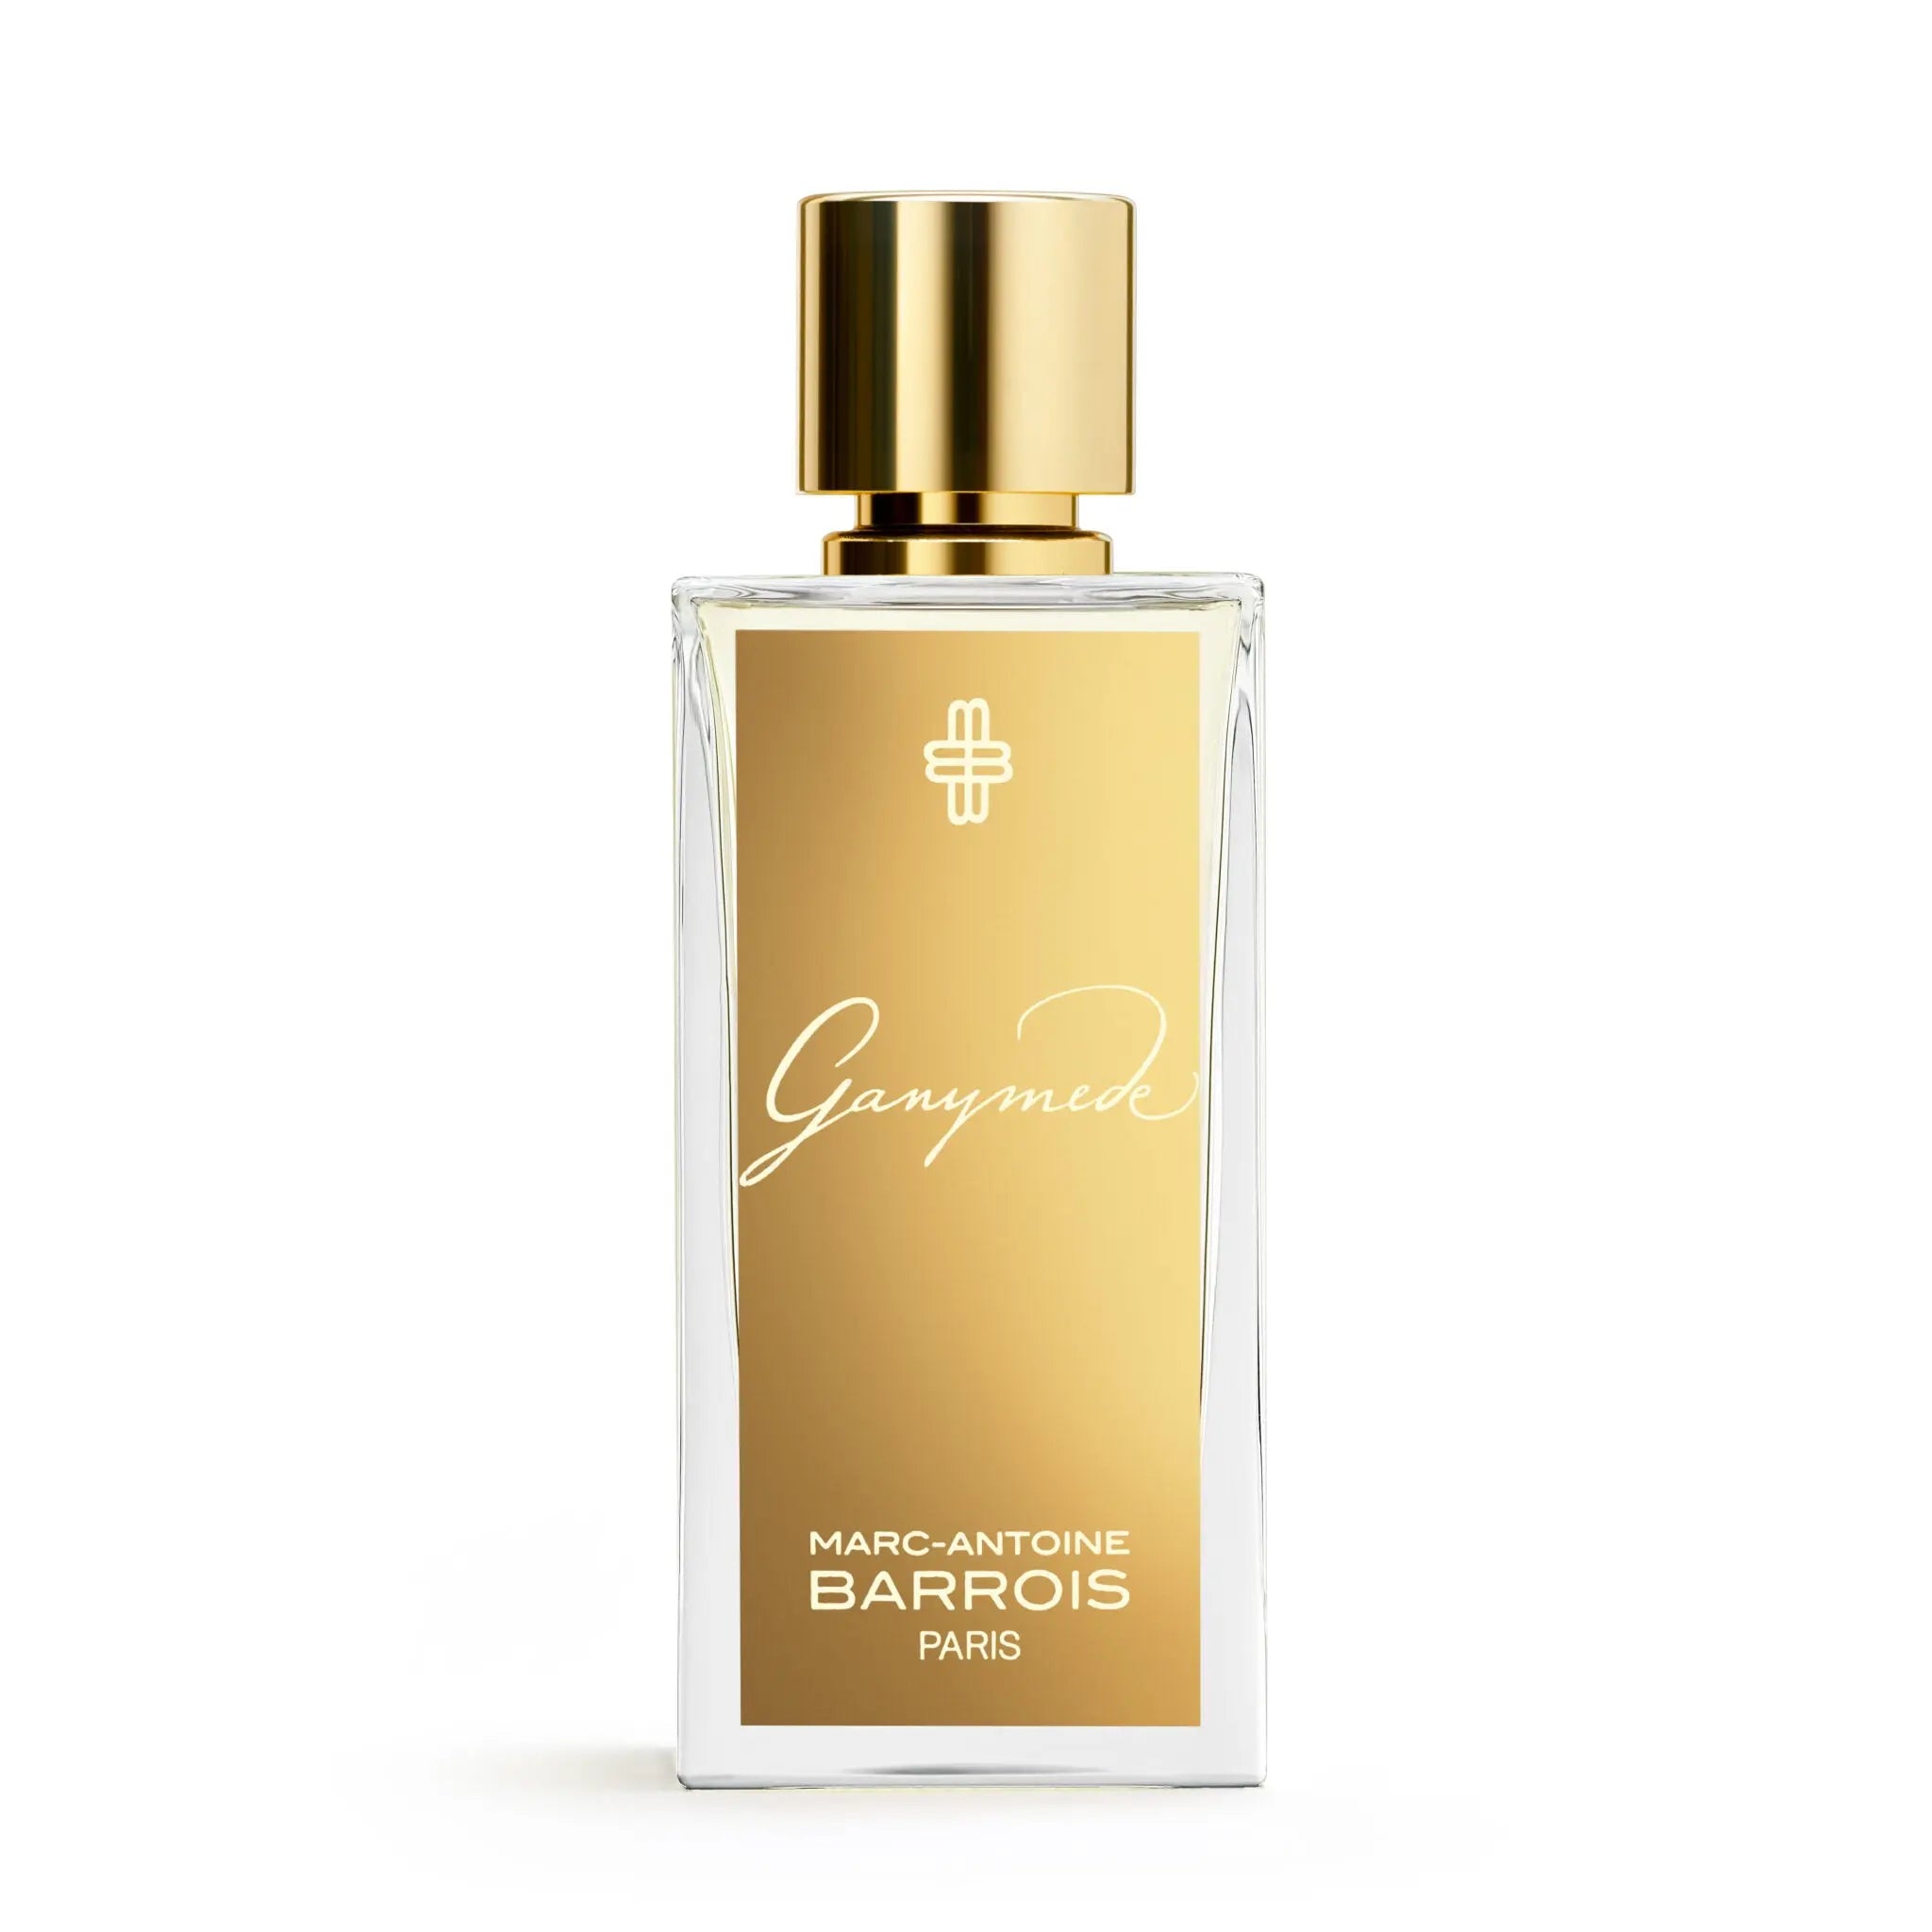 Barrois Ganymede eau de parfum - 30 ml